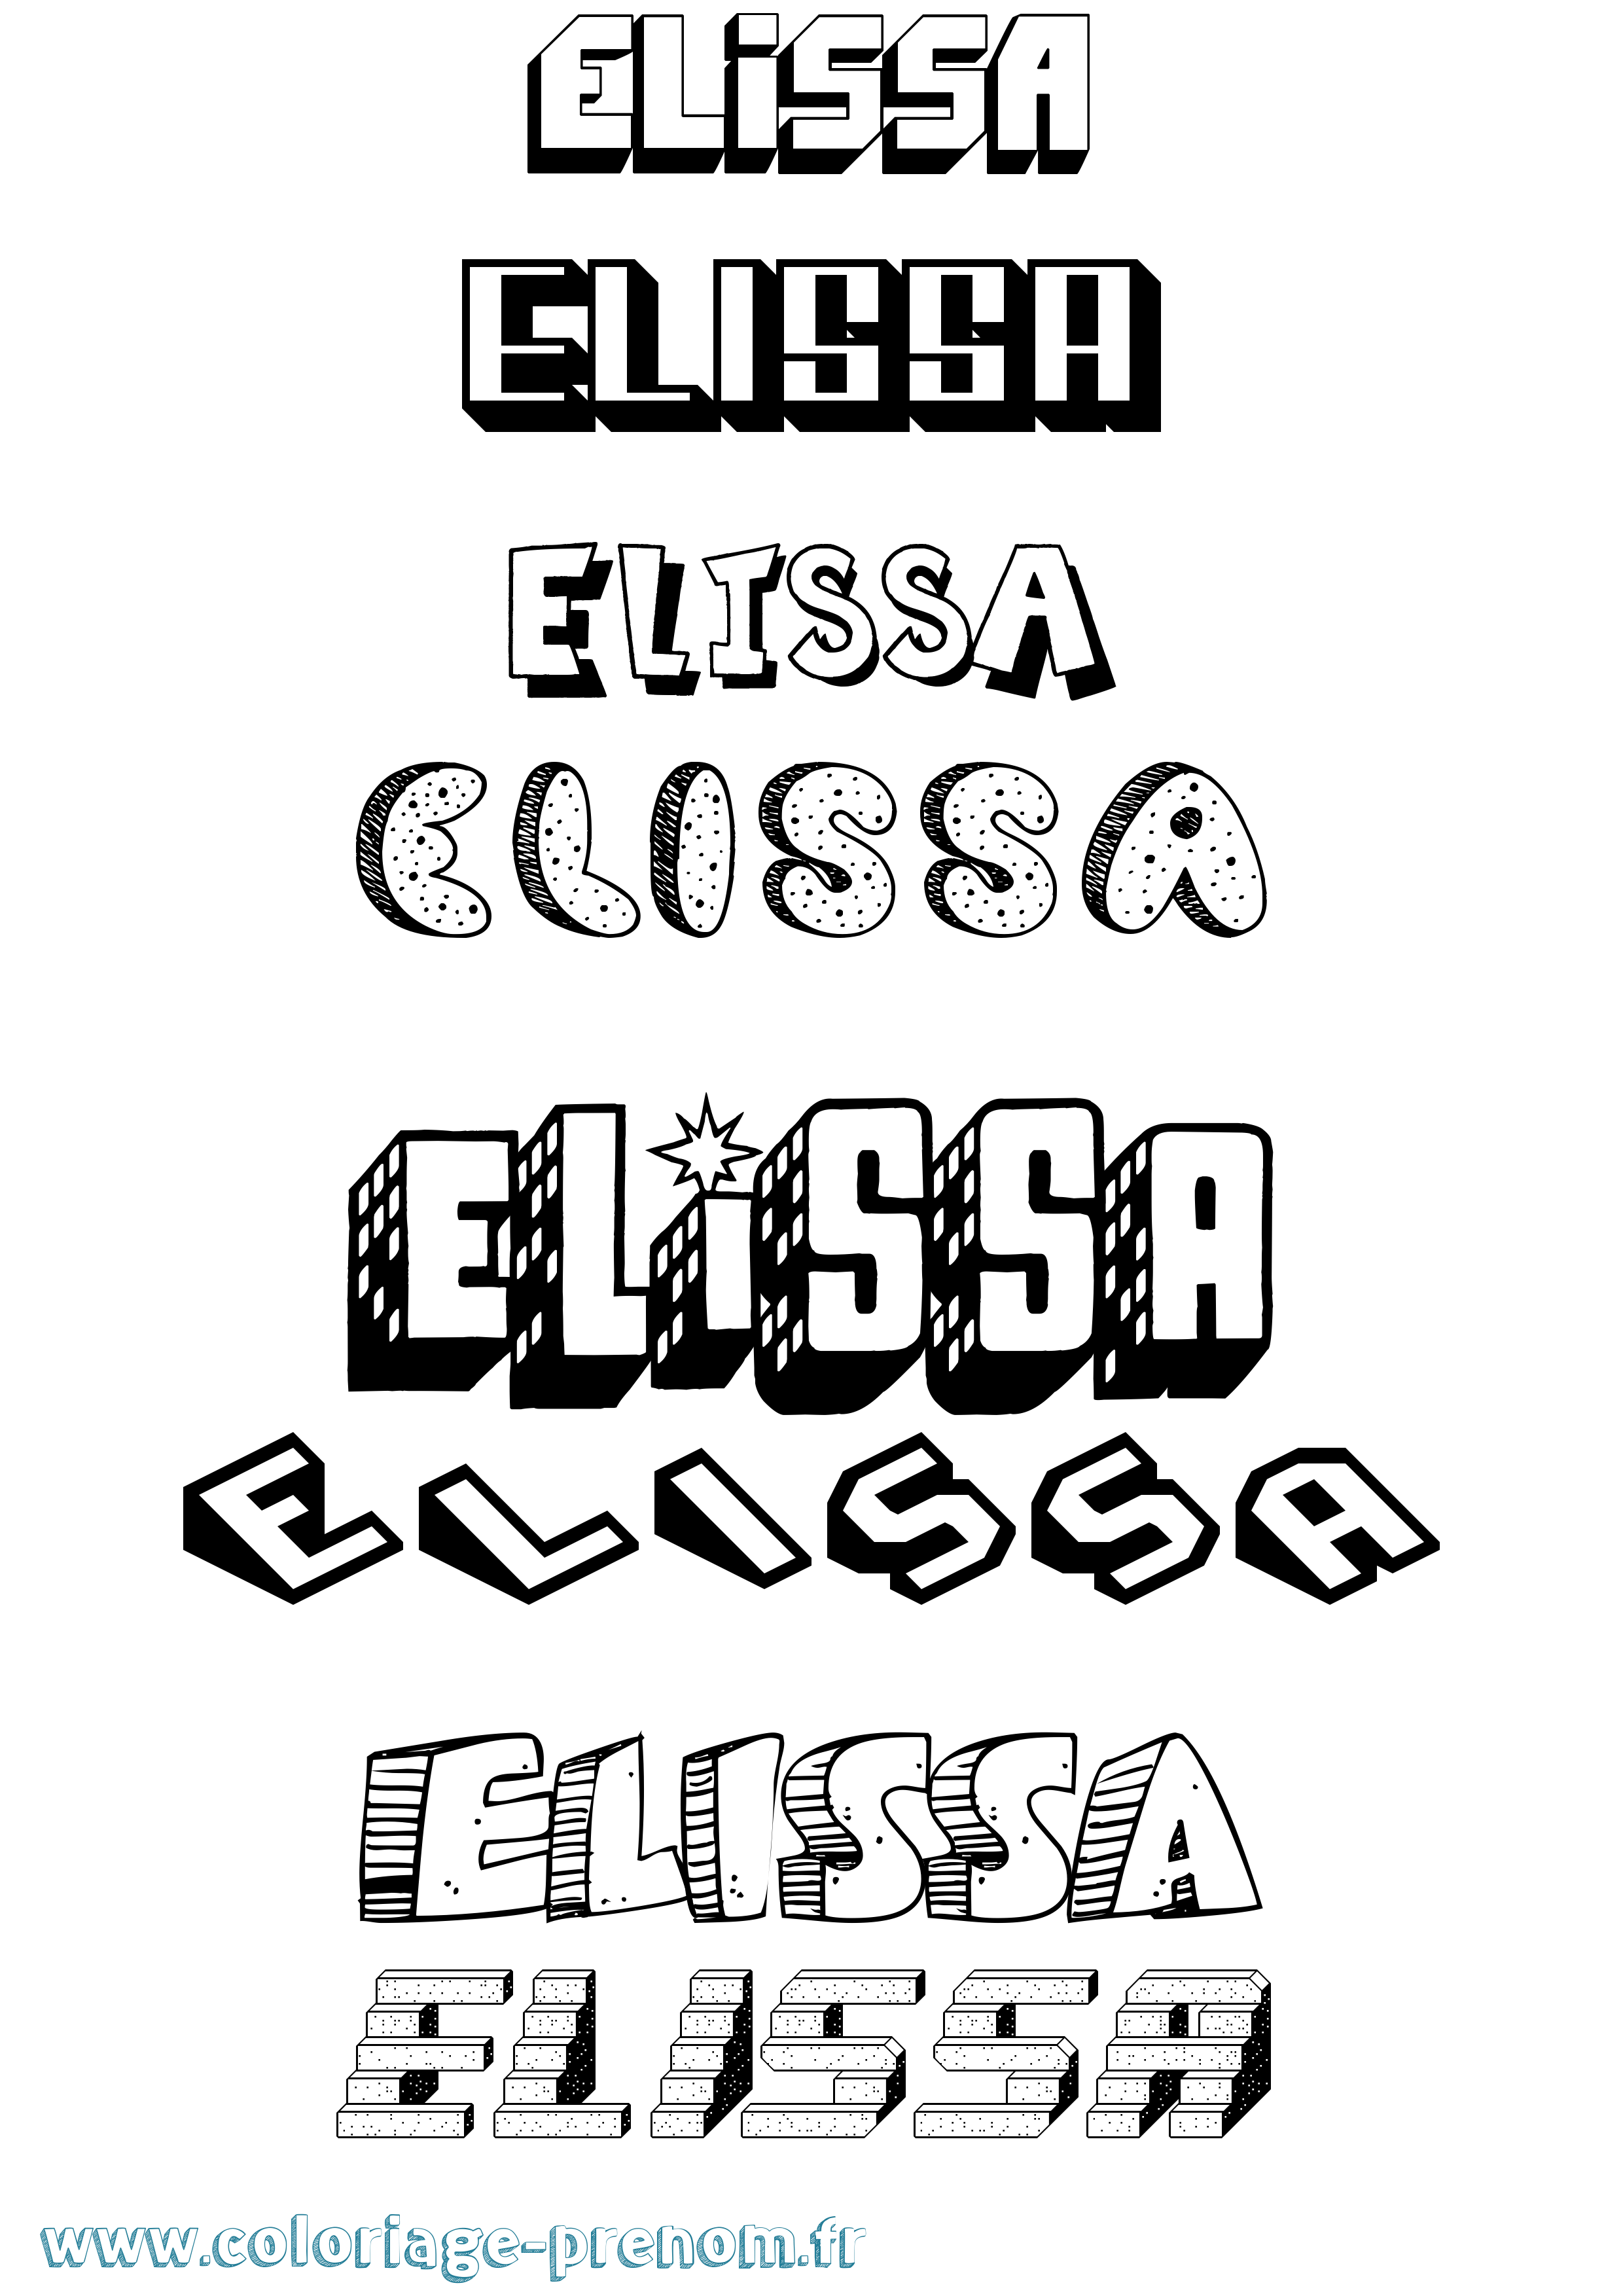 Coloriage prénom Elissa